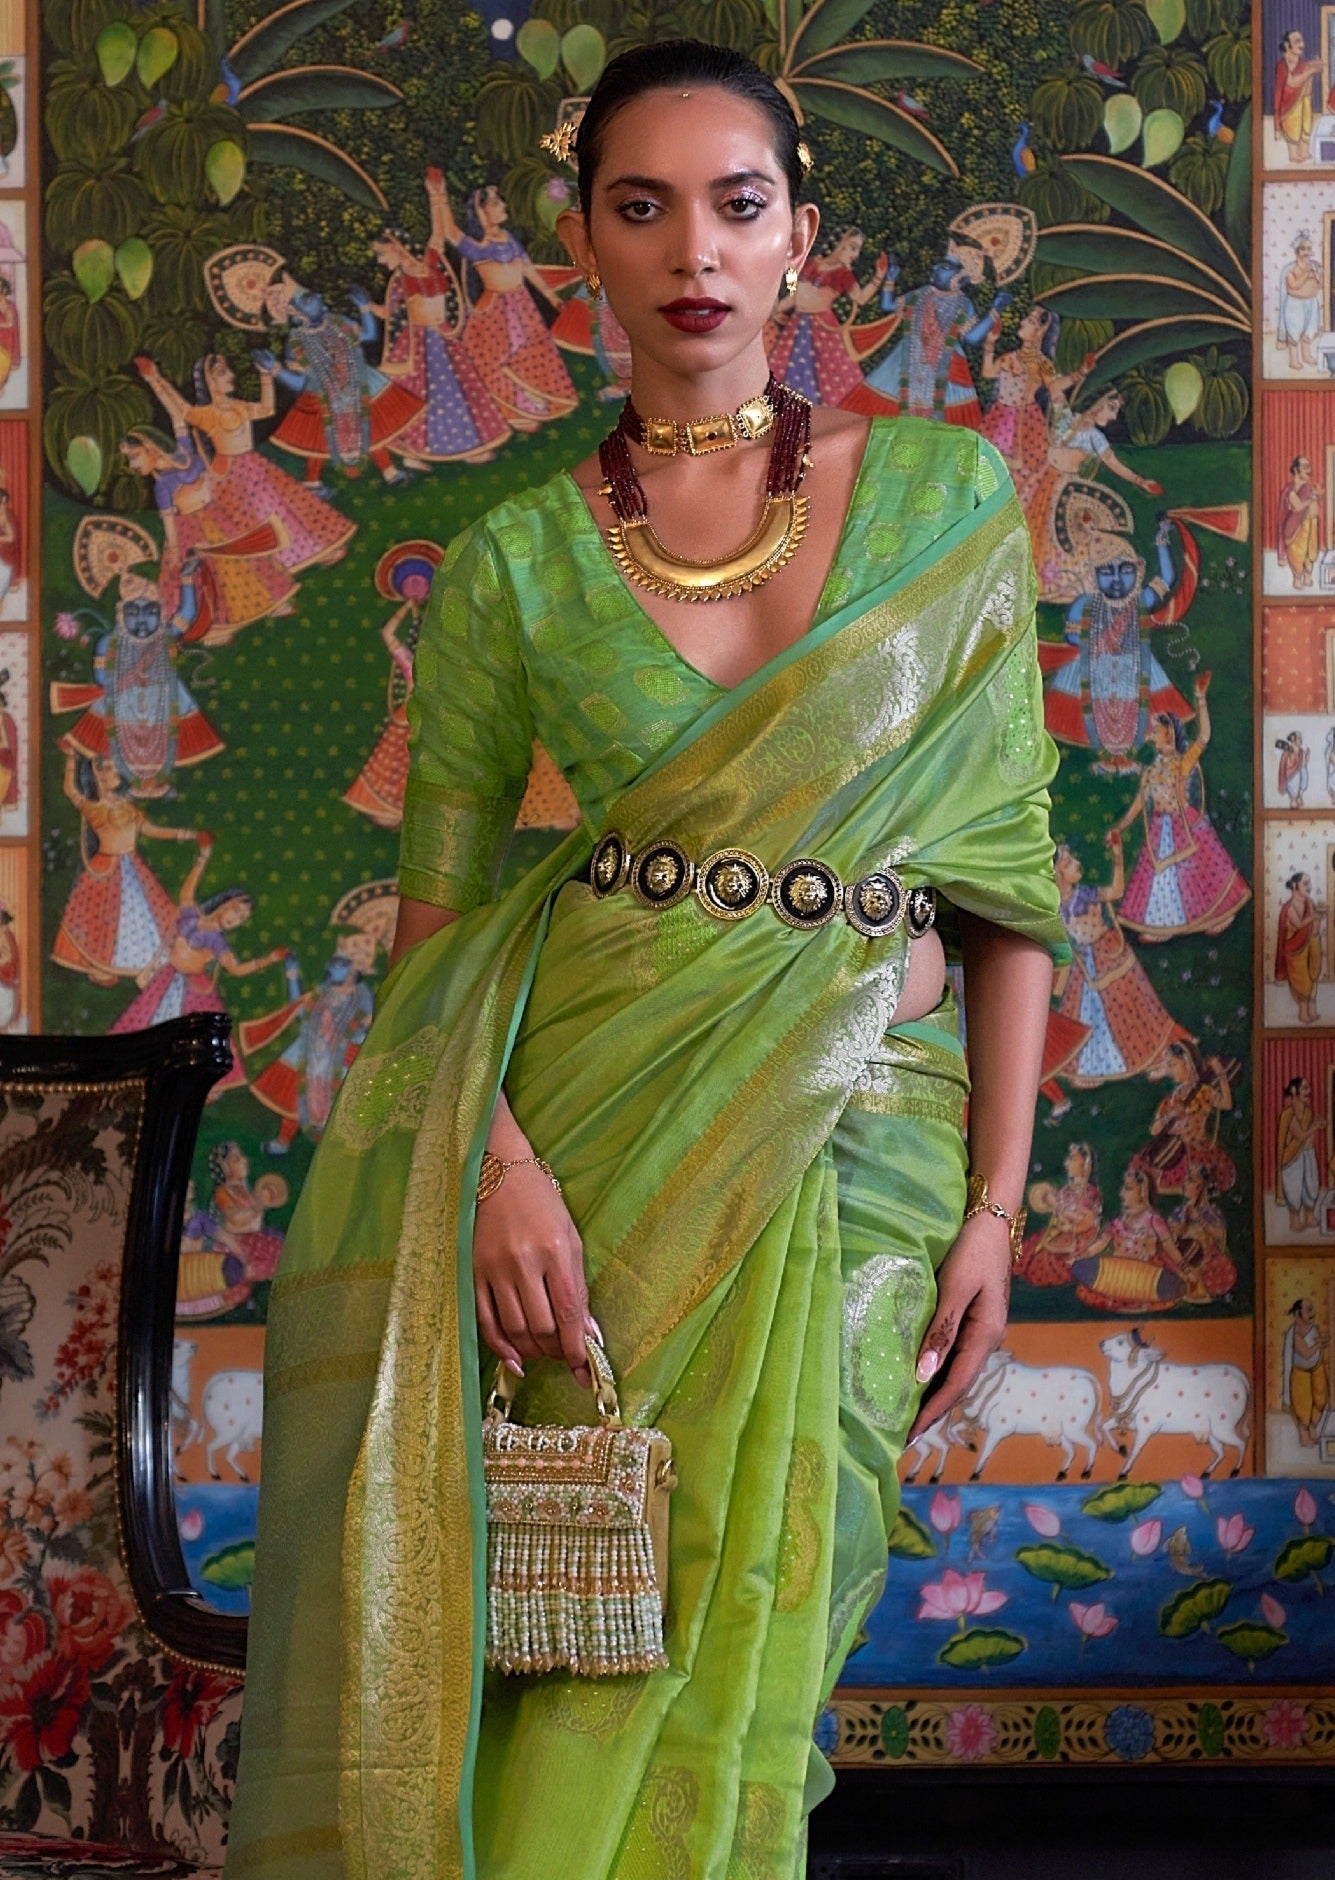 woman wearing light green handloom banarasi organza saree holding a fancy bag in her right hand